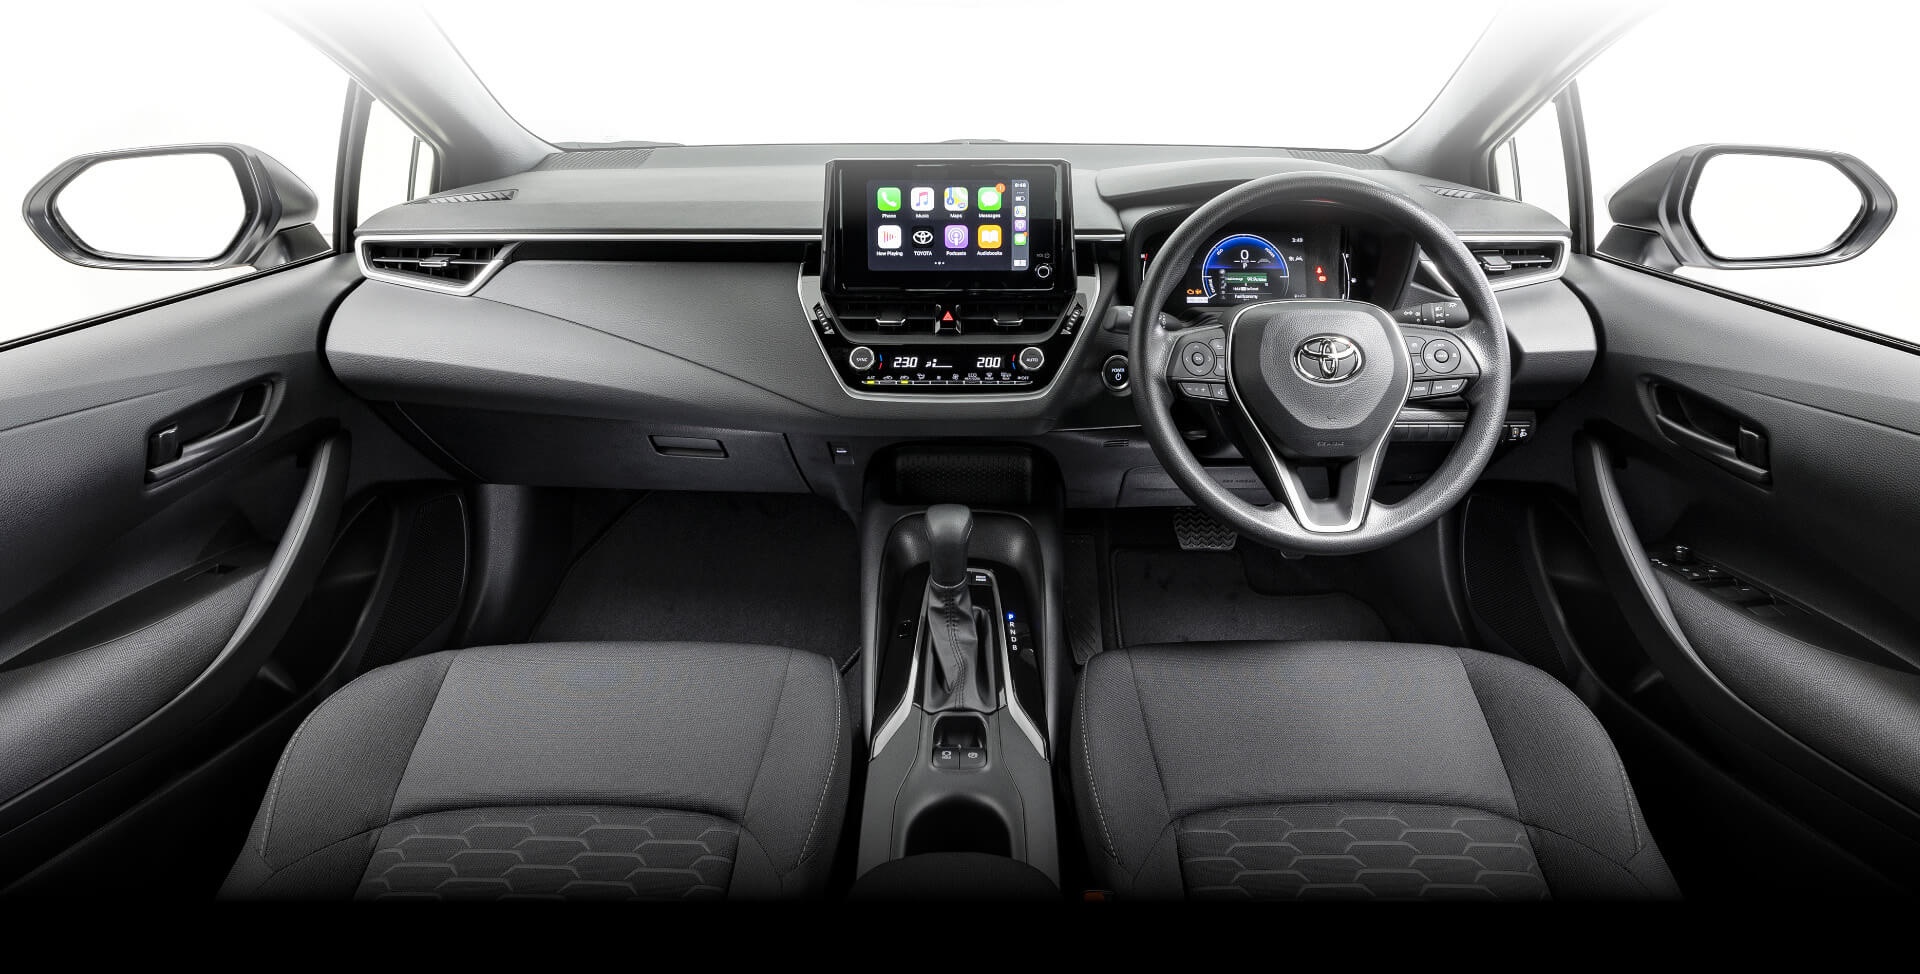 Corolla-Hatch-GX-Hybrid-Interior-Features-1920x972